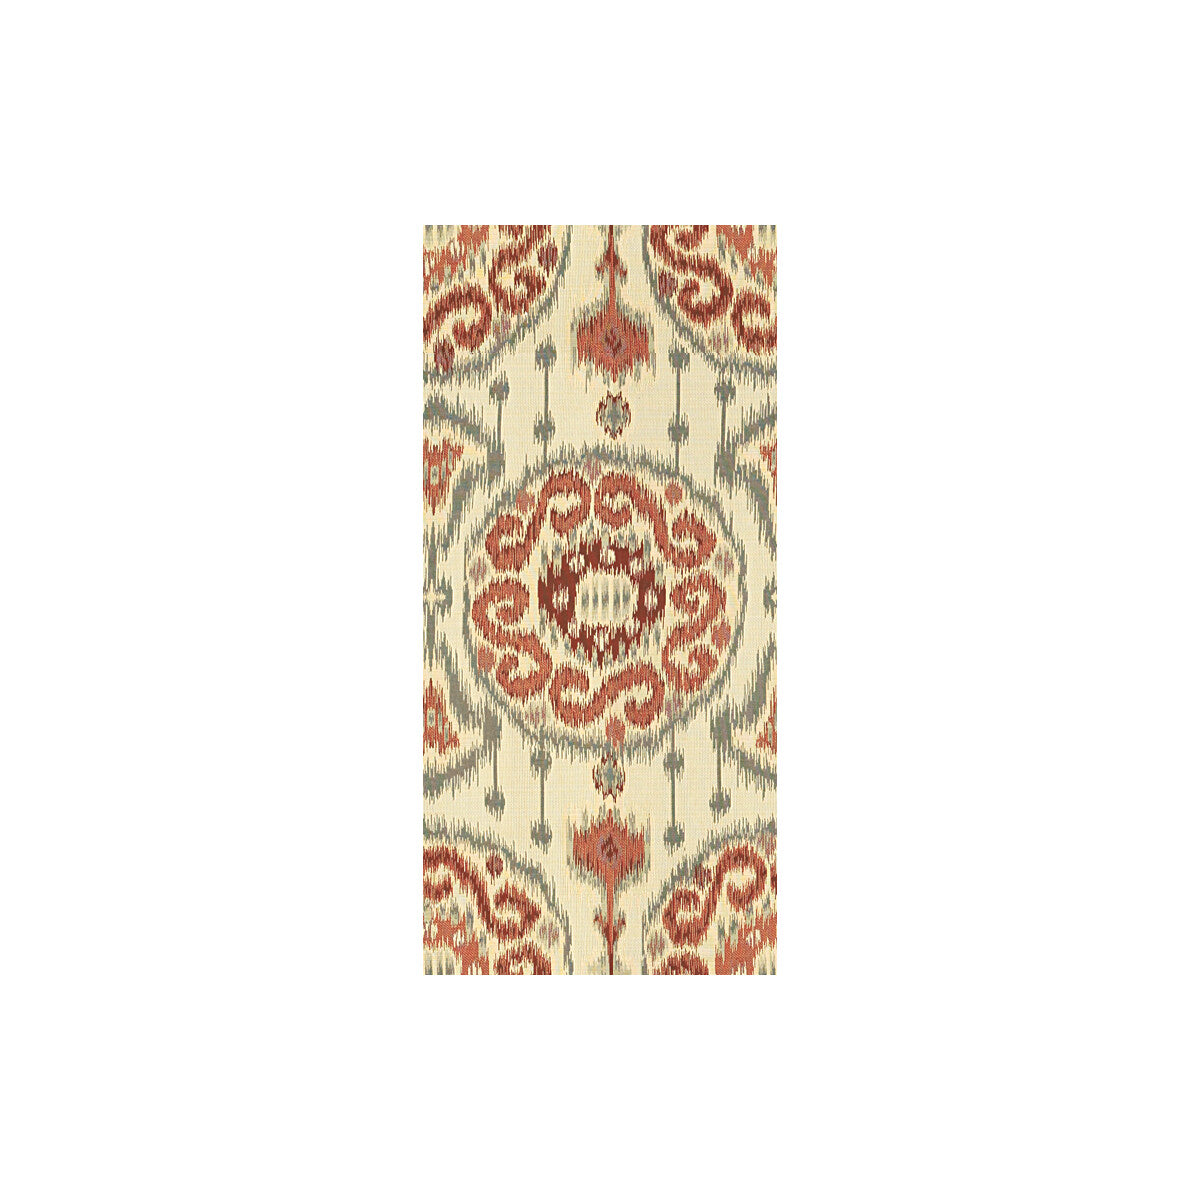 Kravet Design fabric in 31393-915 color - pattern 31393.915.0 - by Kravet Design in the Gis collection